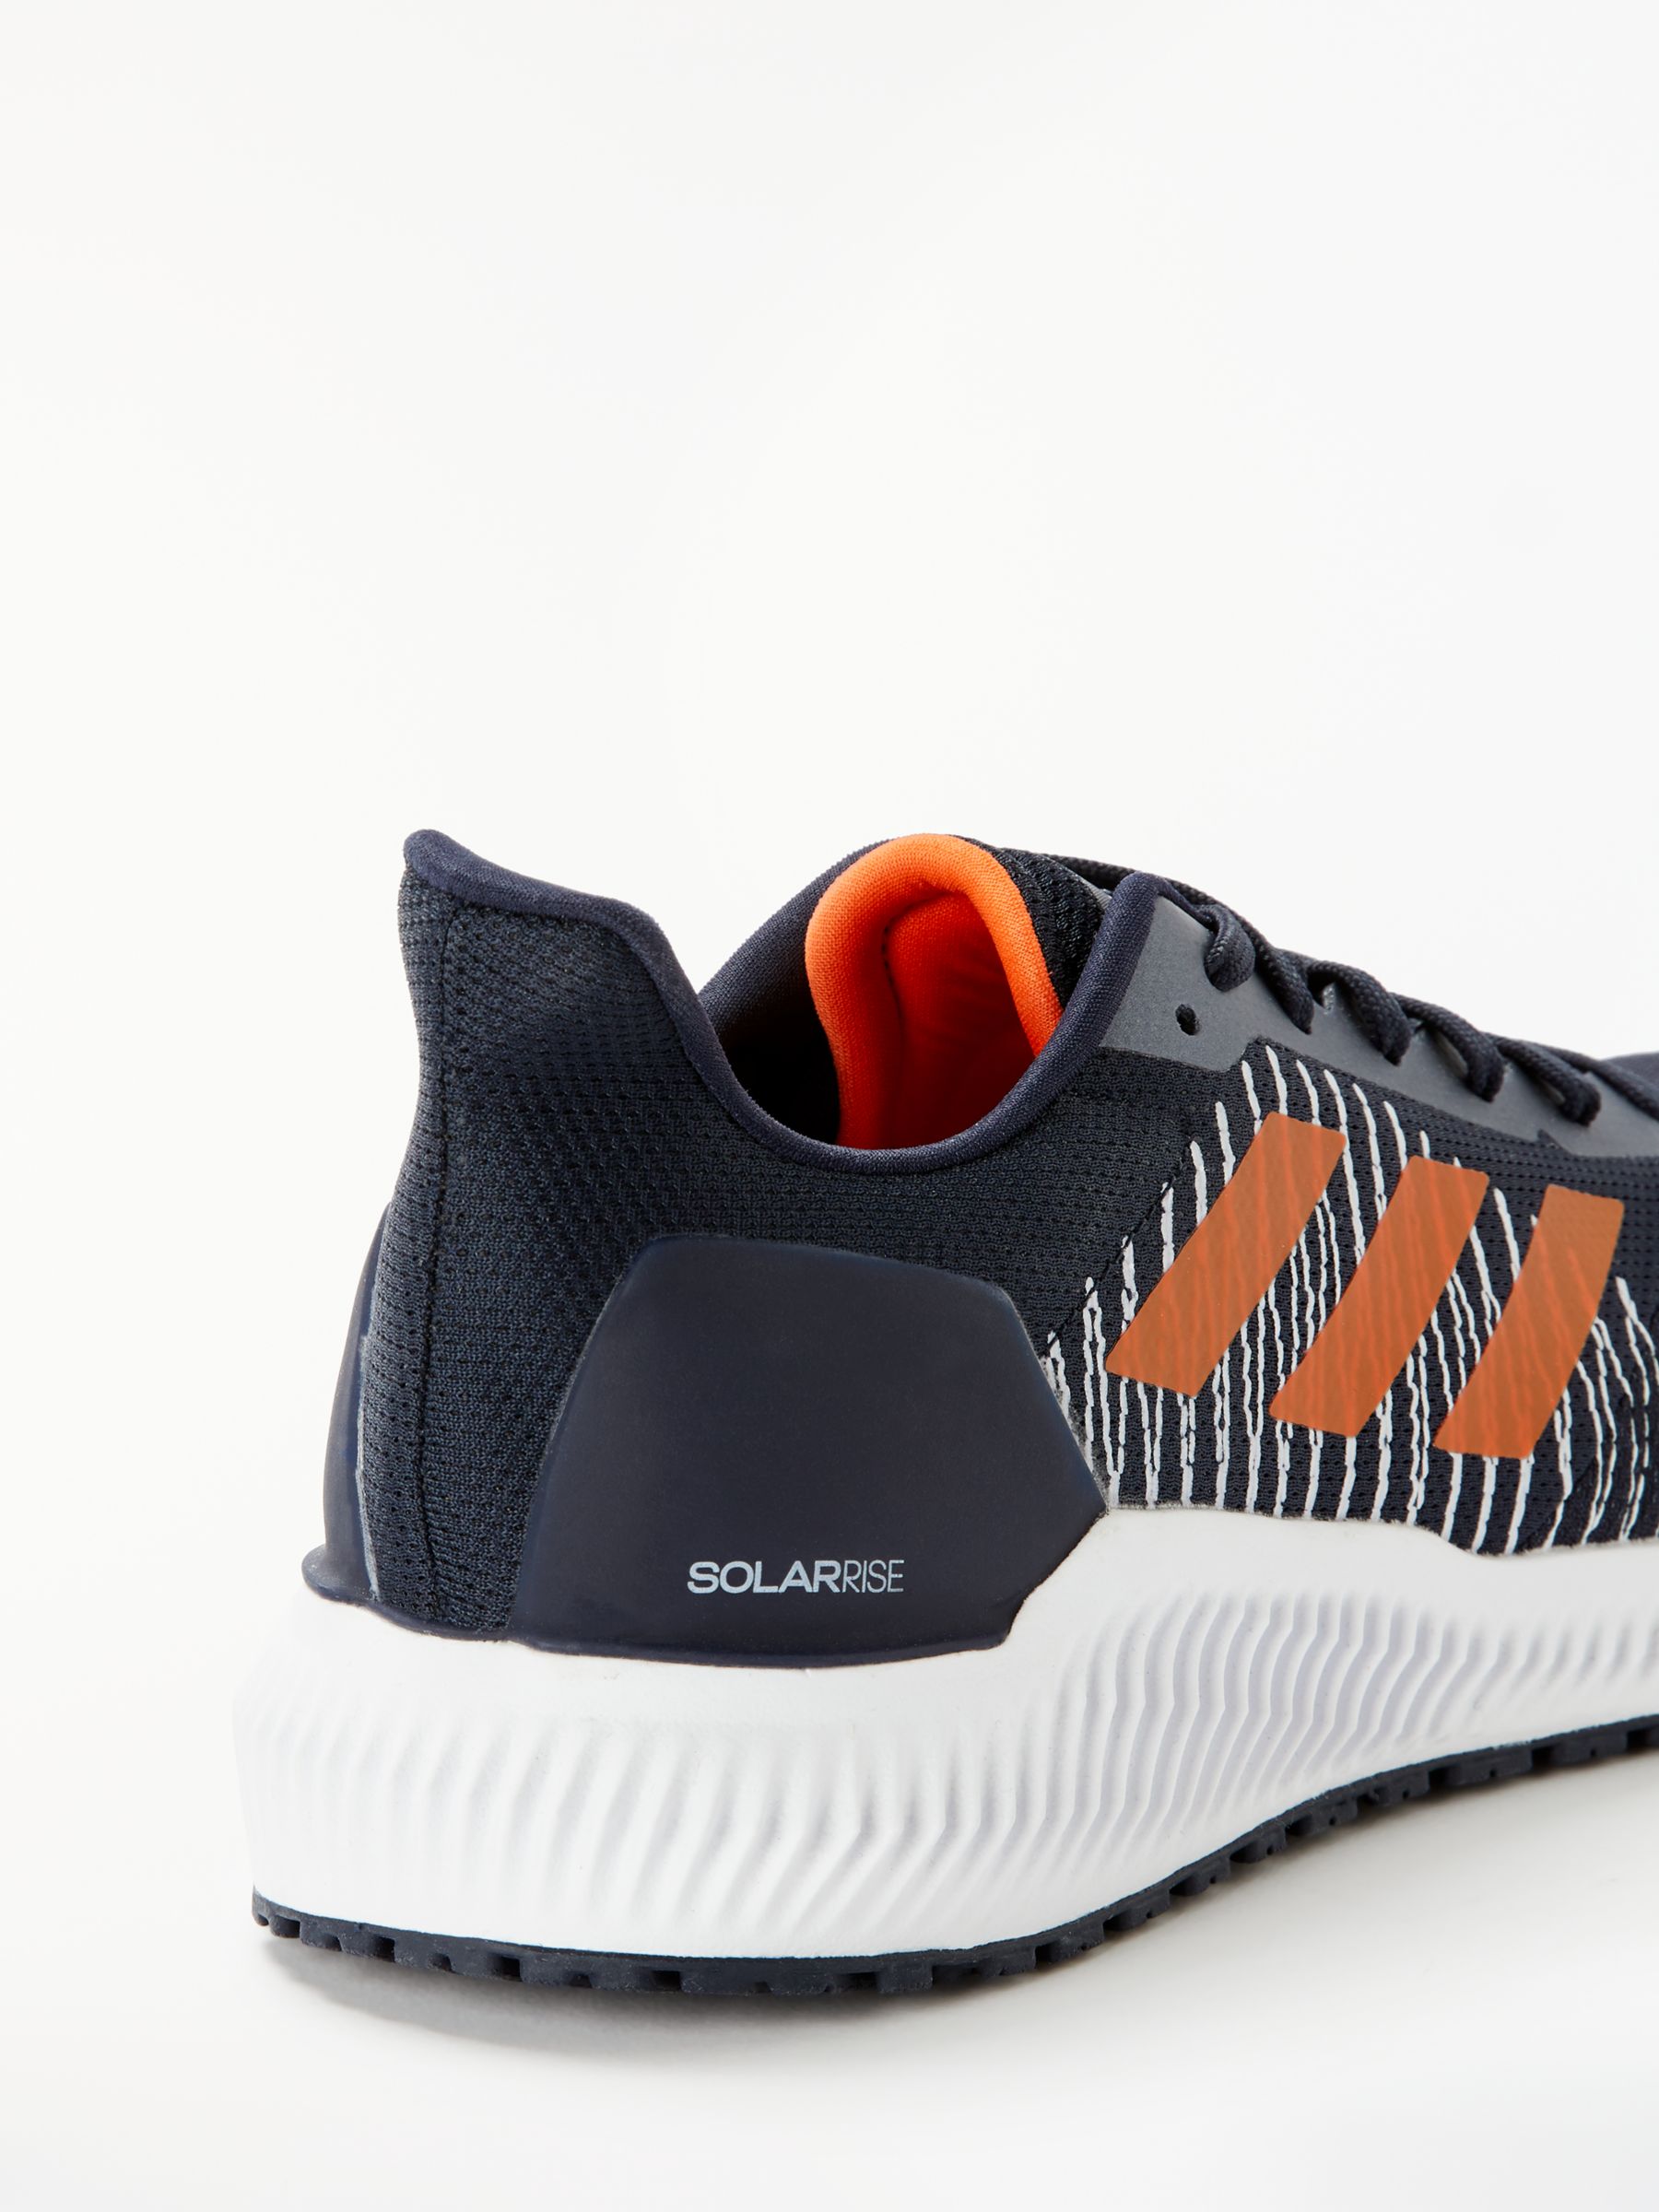 adidas solar ride shoes